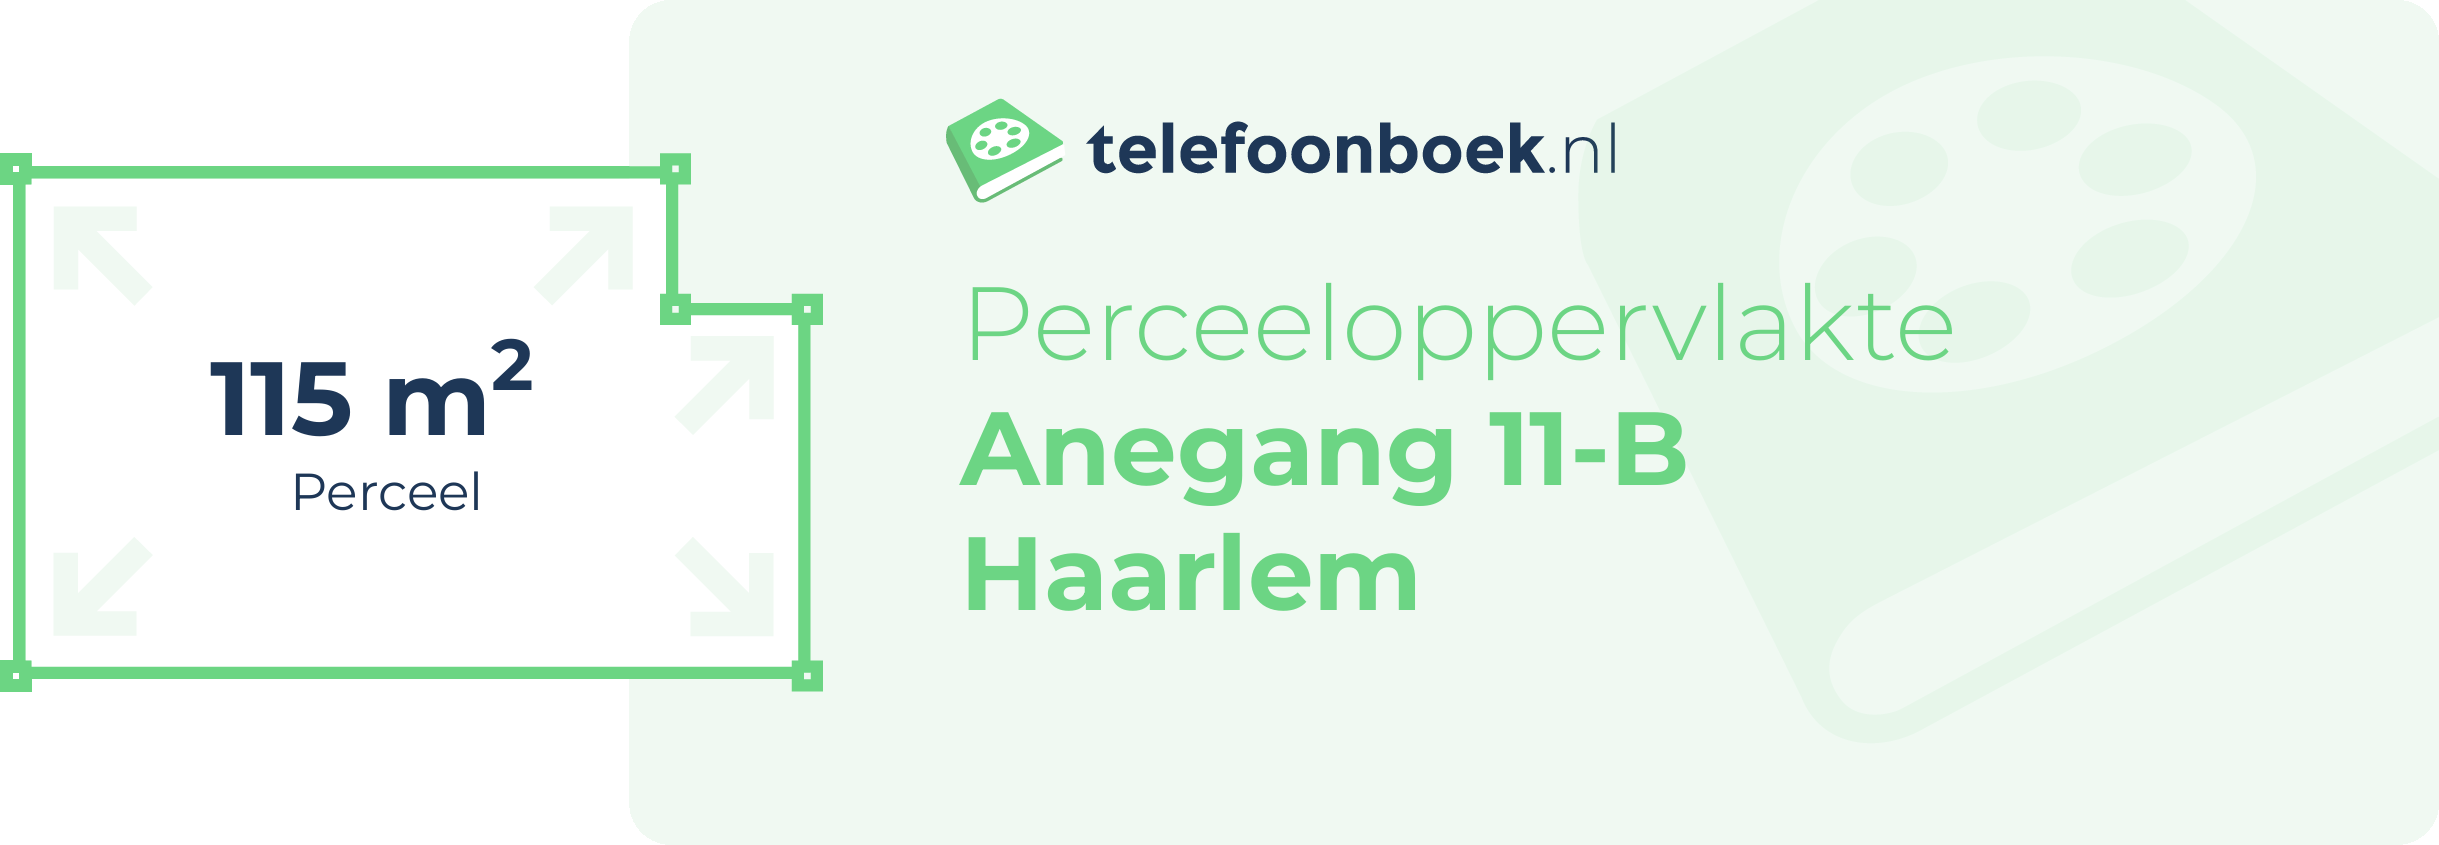 Perceeloppervlakte Anegang 11-B Haarlem